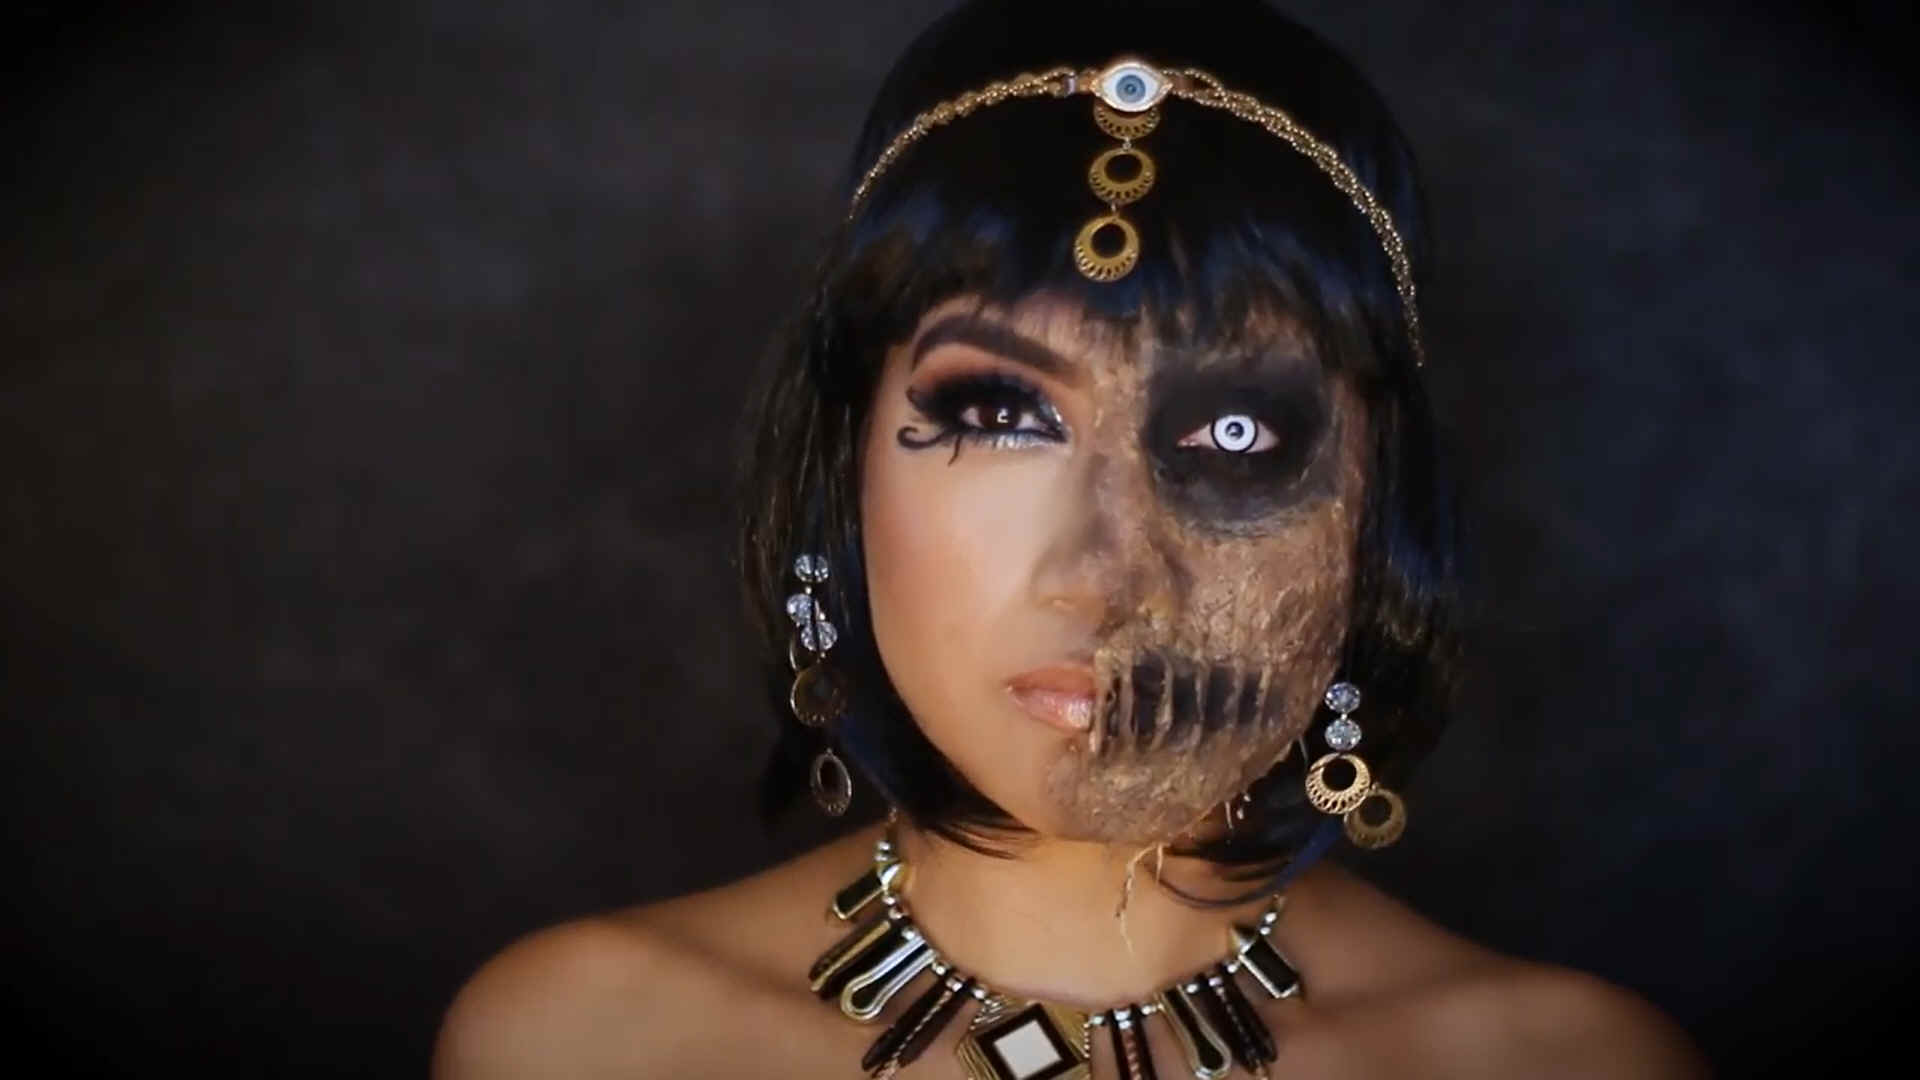 Cleopatra mummy makeup, very good, especially eye detail